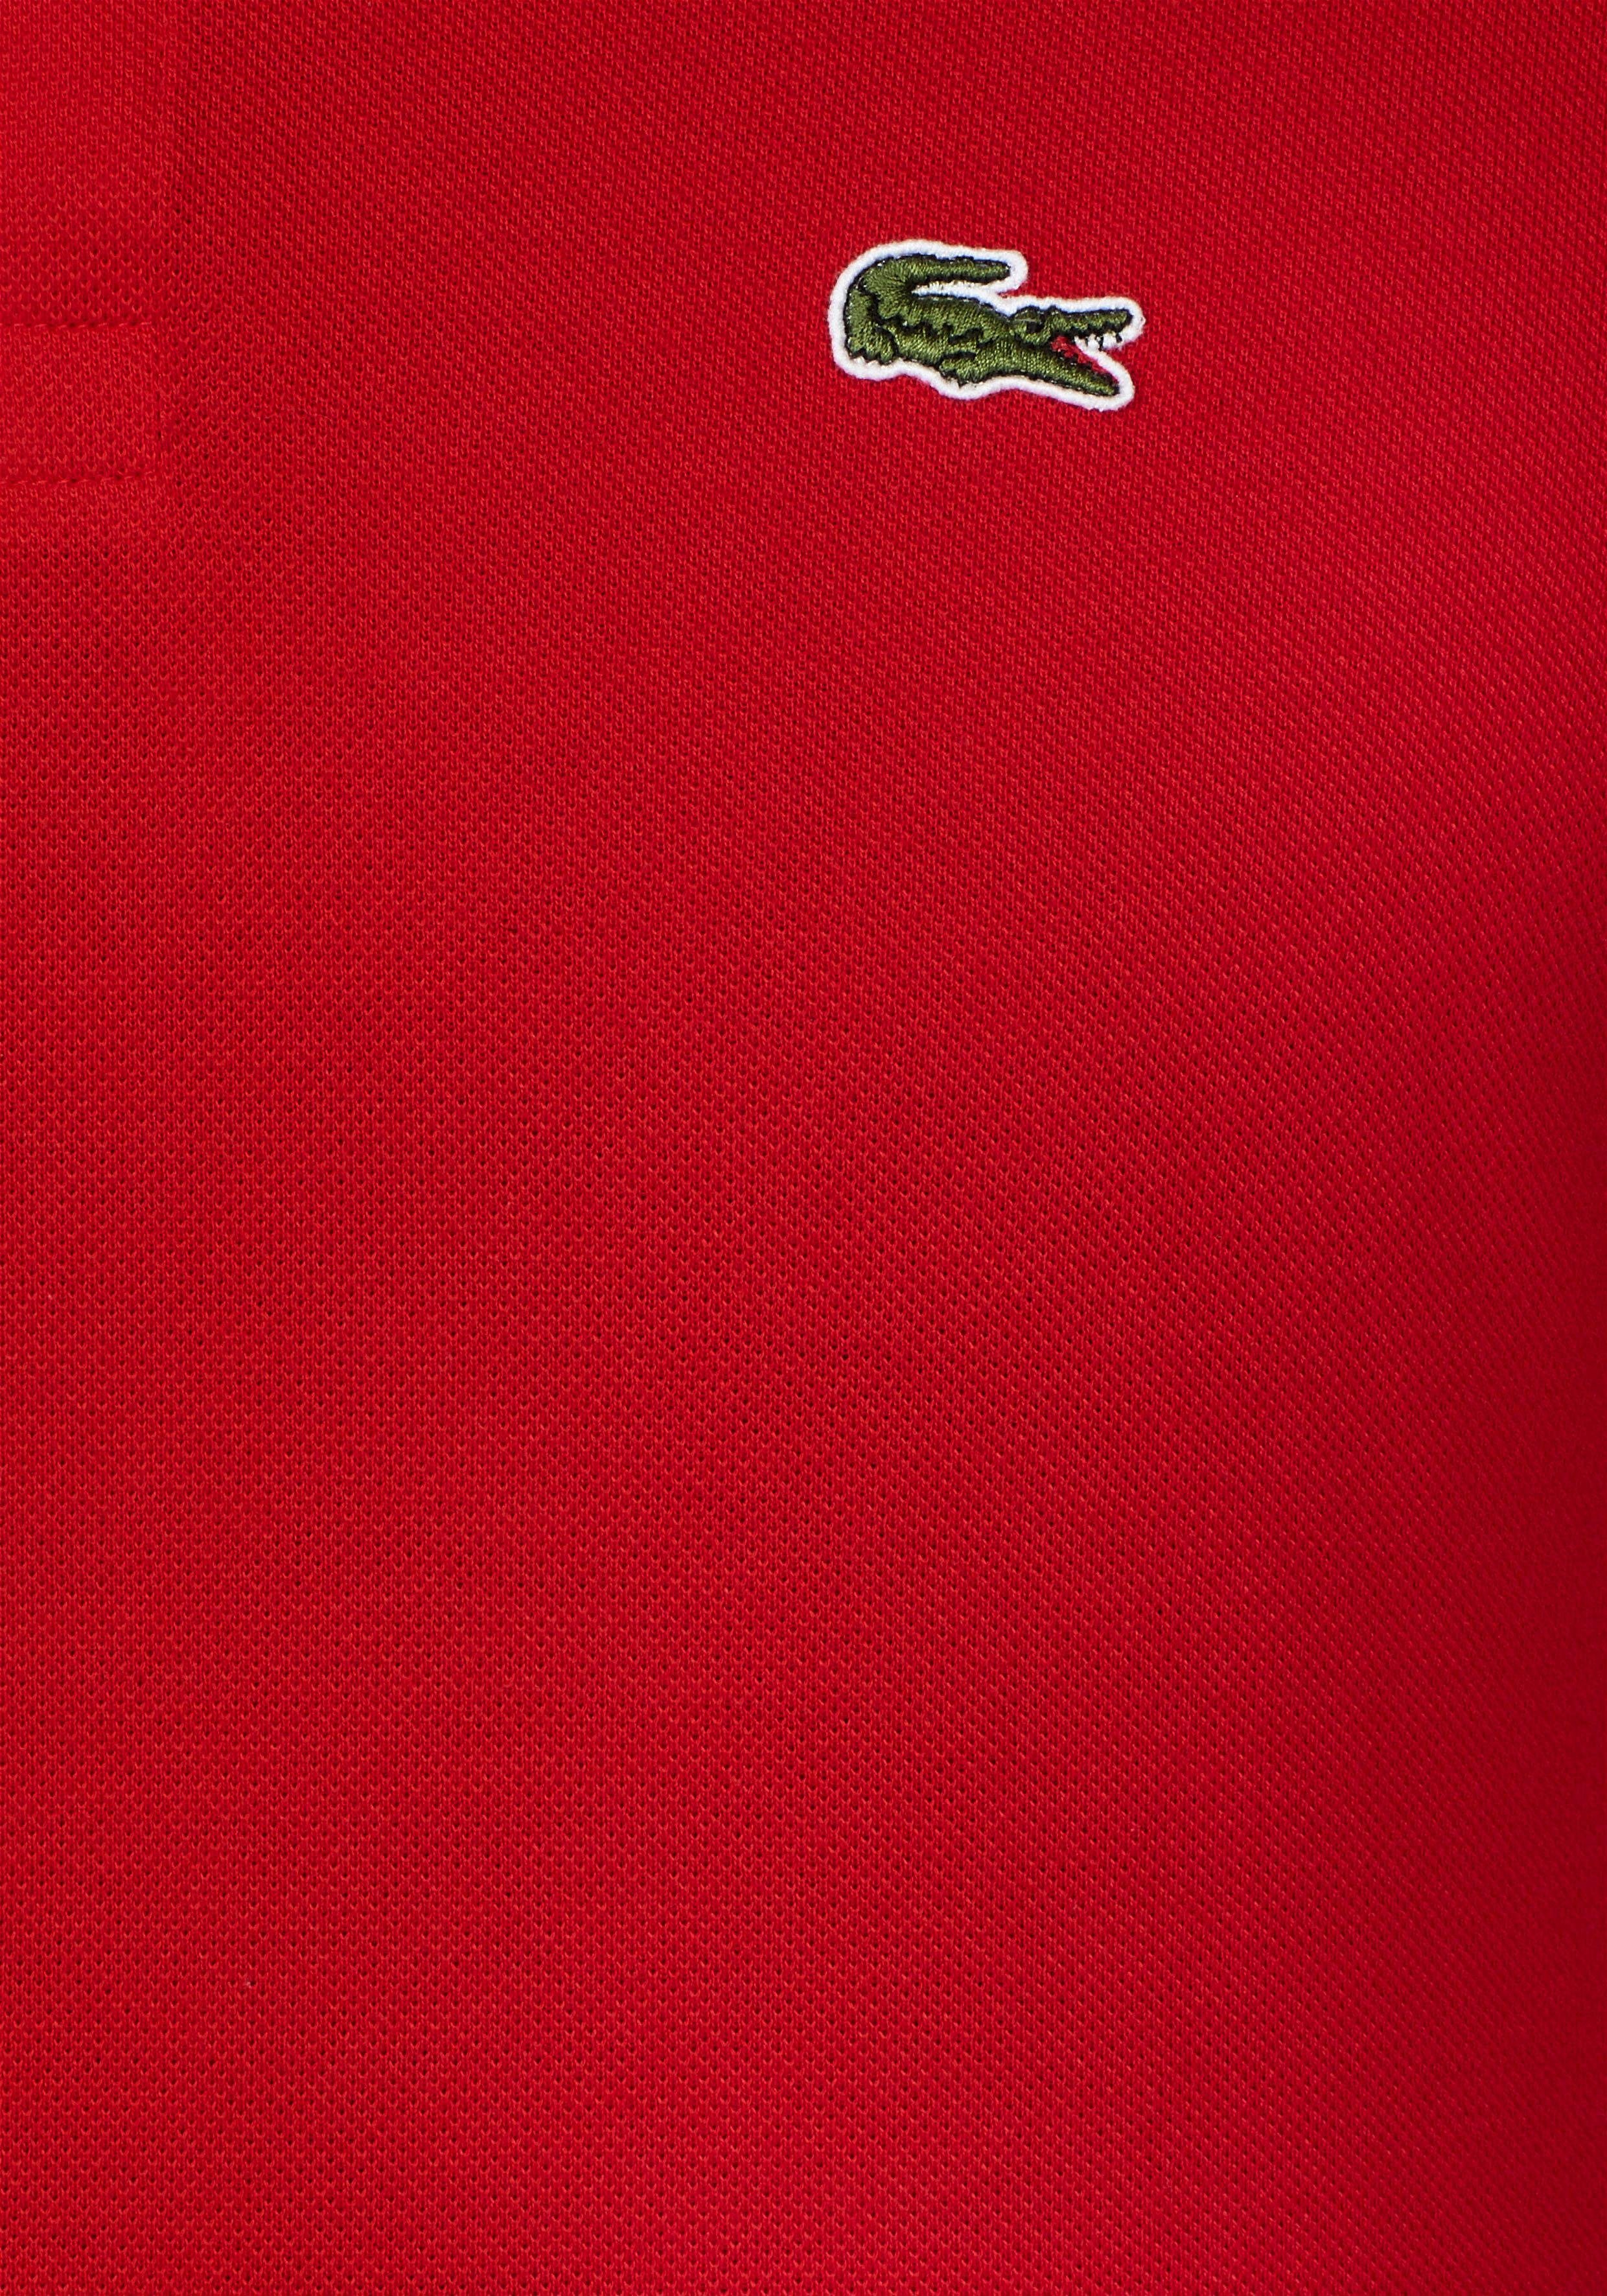 (1-tlg) Perlmuttoptik Poloshirt in Knöpfen rot-knallrot mit Lacoste